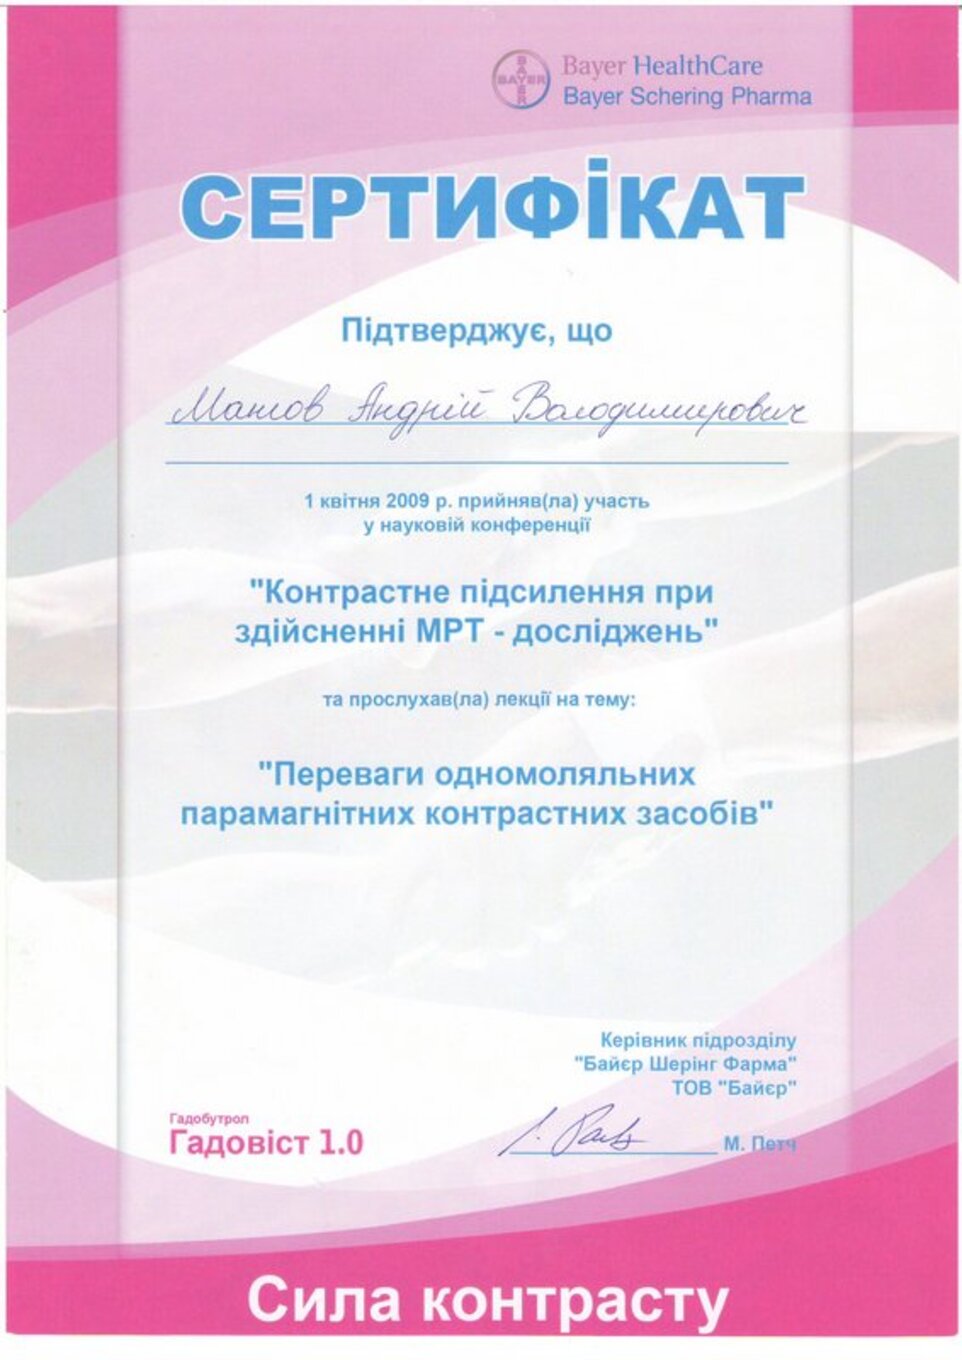 certificates/mangov-andrij-volodimirovich/mangov-certificates-11.jpg